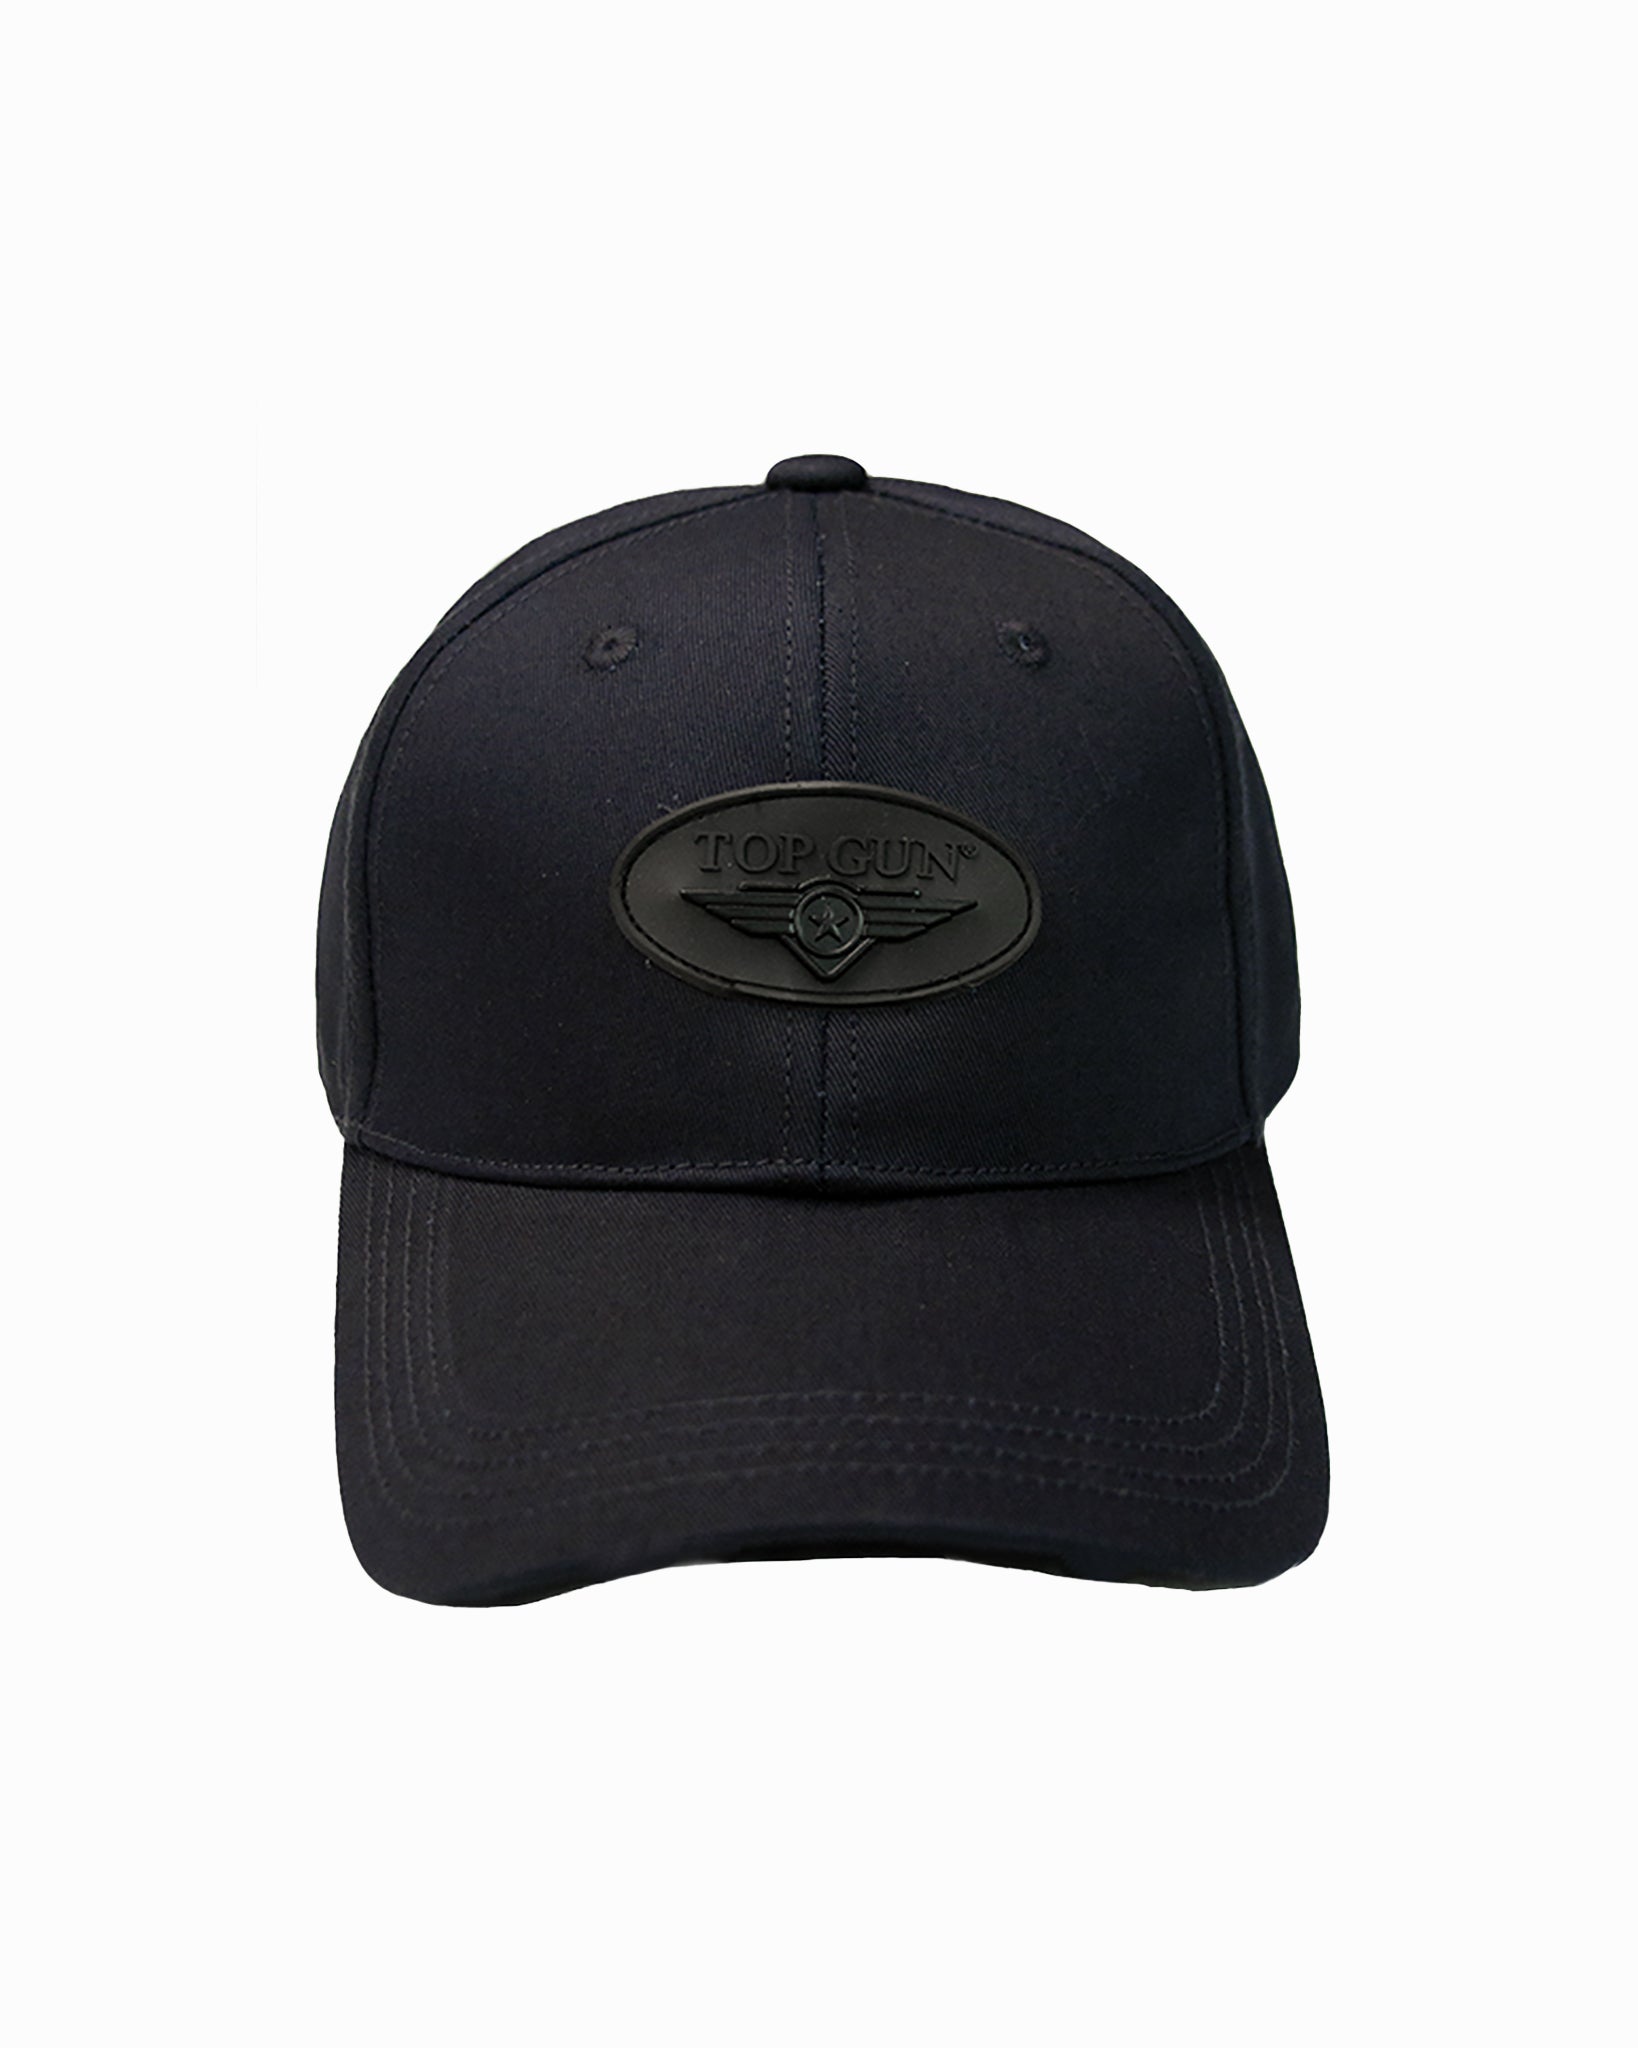 Store and Trucker Hat, | Gun Store Beanie, Gun: | Top Maverick – Cap, More Official Caps Top